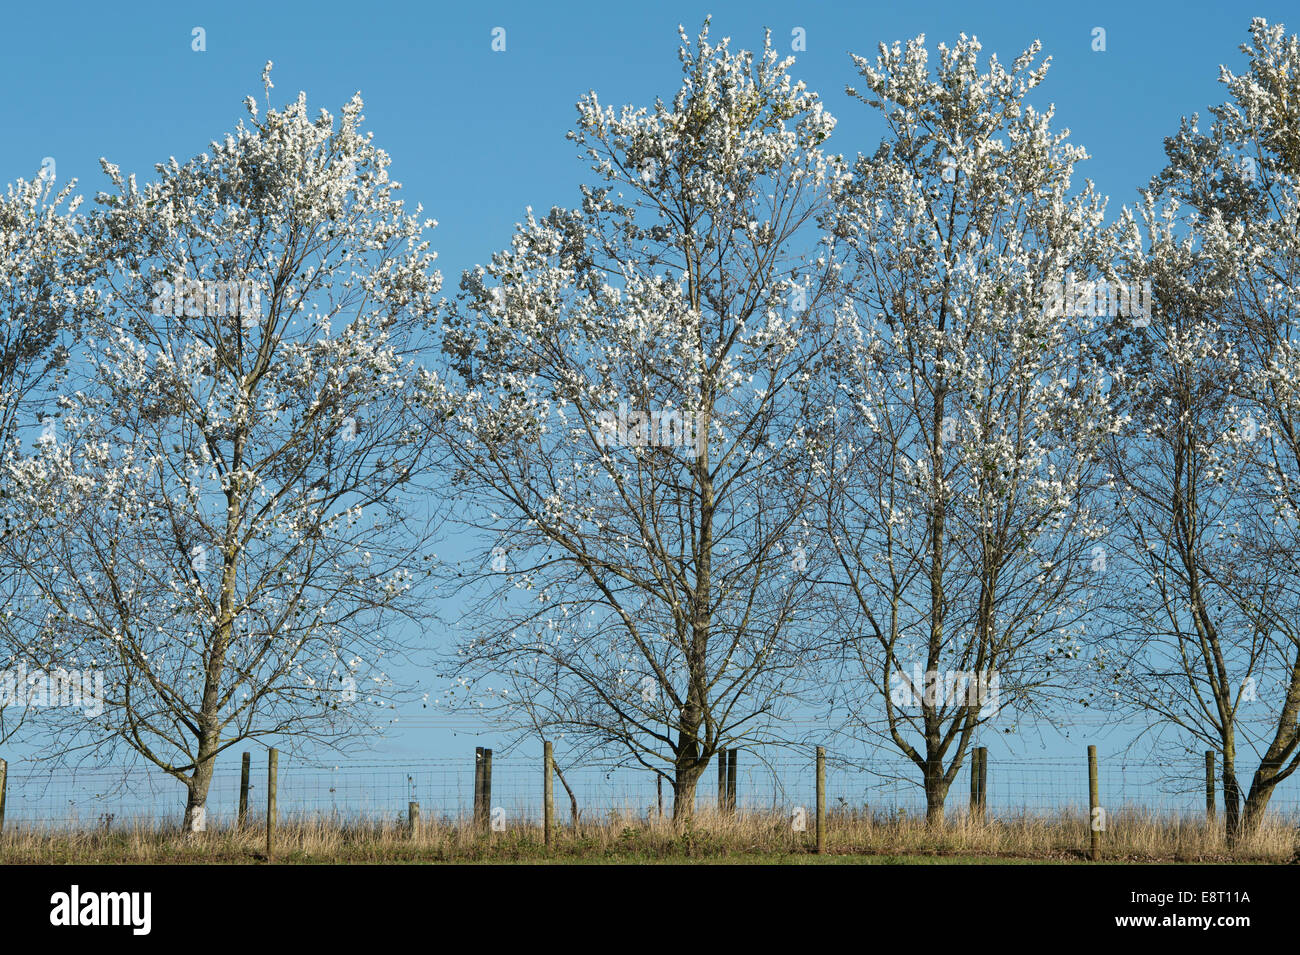 Populus alba. Silver poplar trees against blue sky Stock Photo